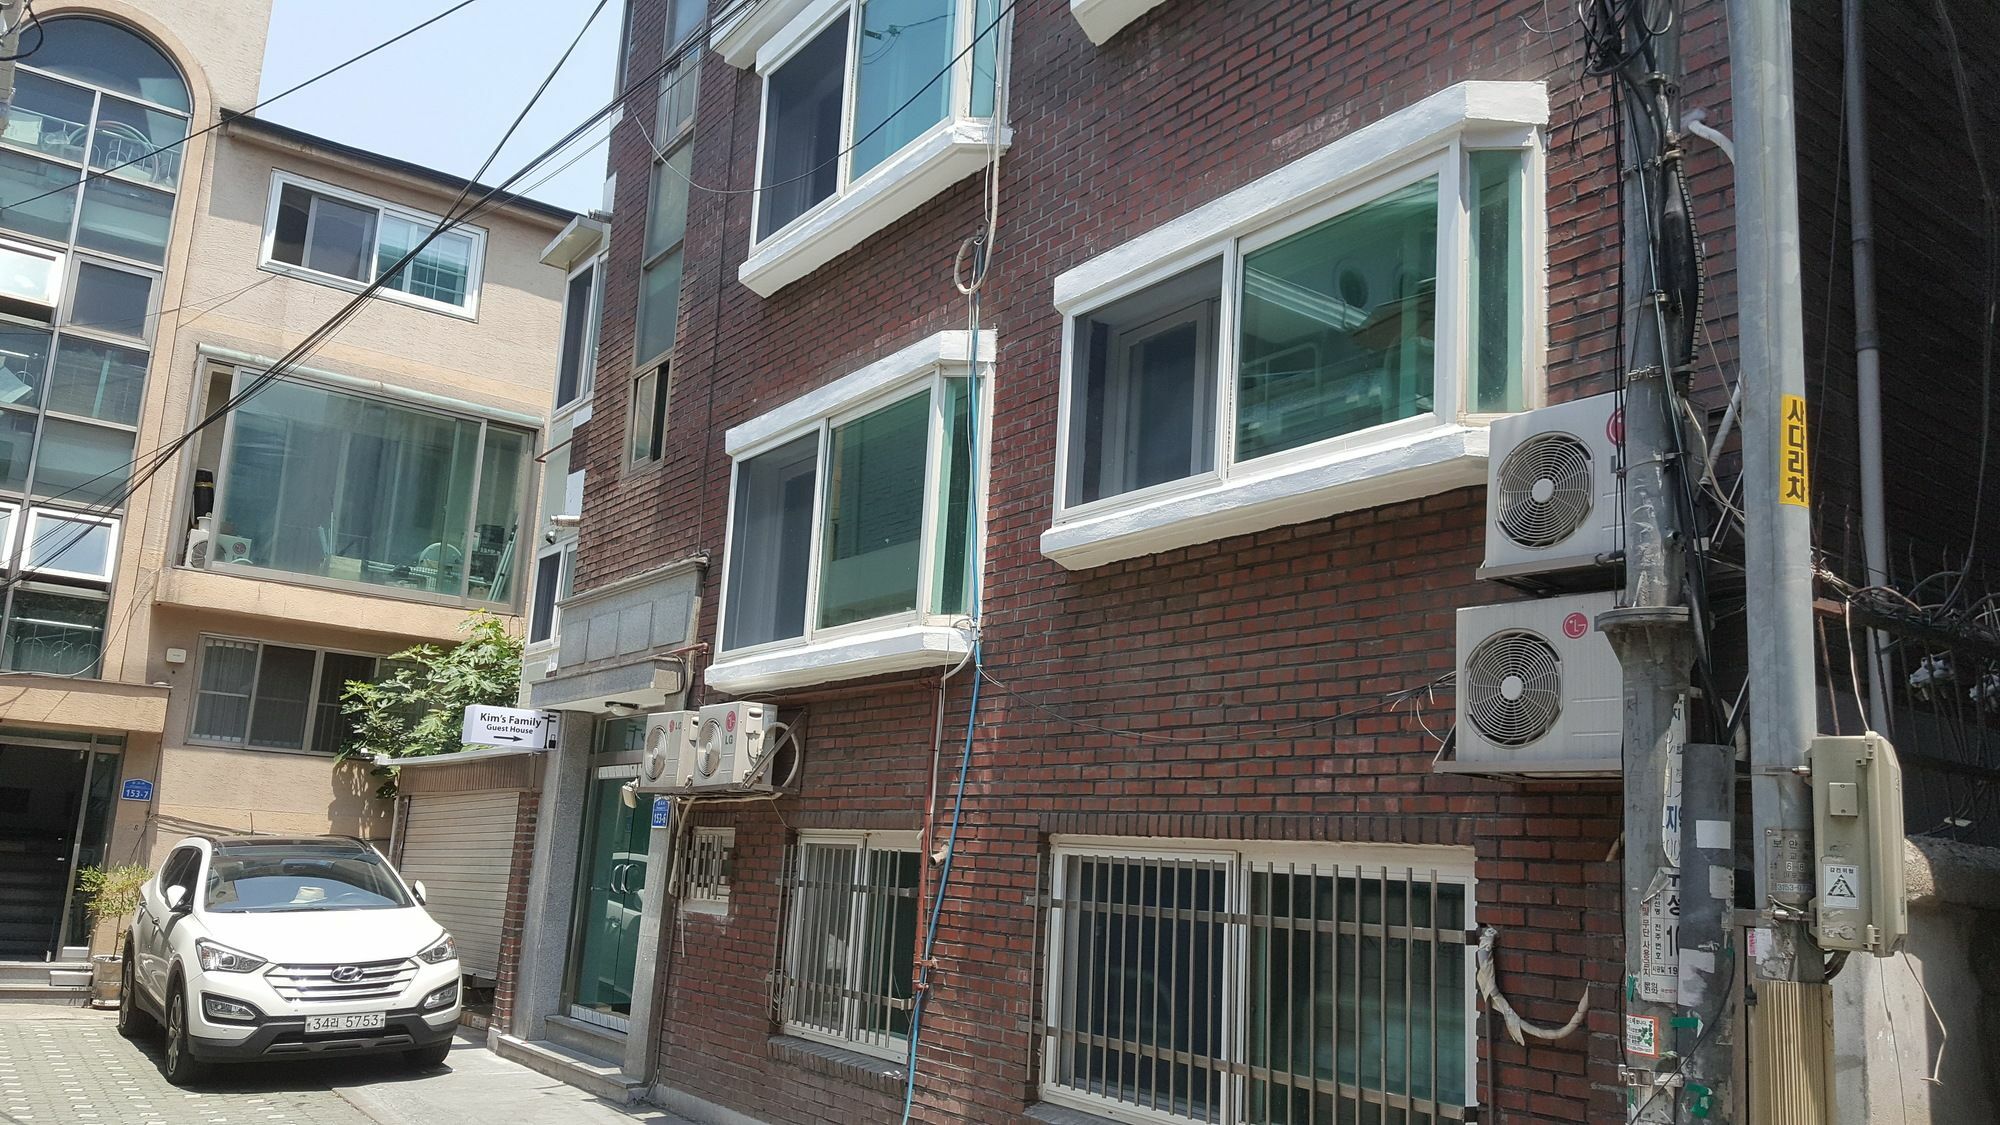 Kim'S Family Guesthouse Seul Exterior foto